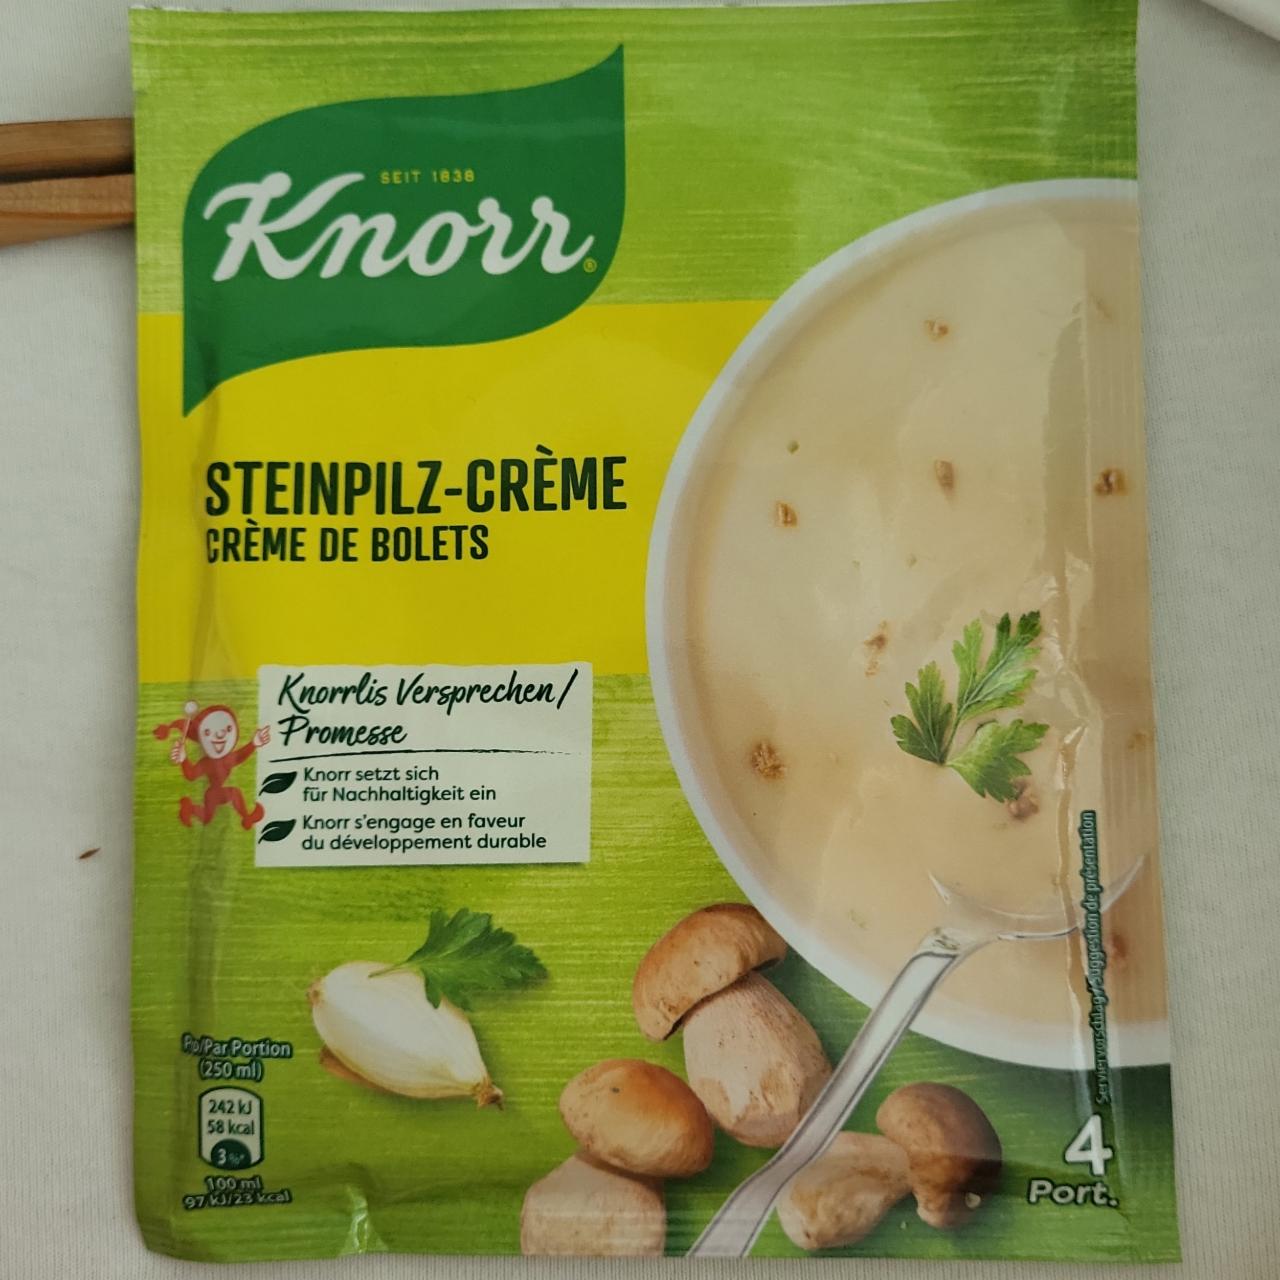 Фото - Steinpilz-creme крем суп с грибами Knorr